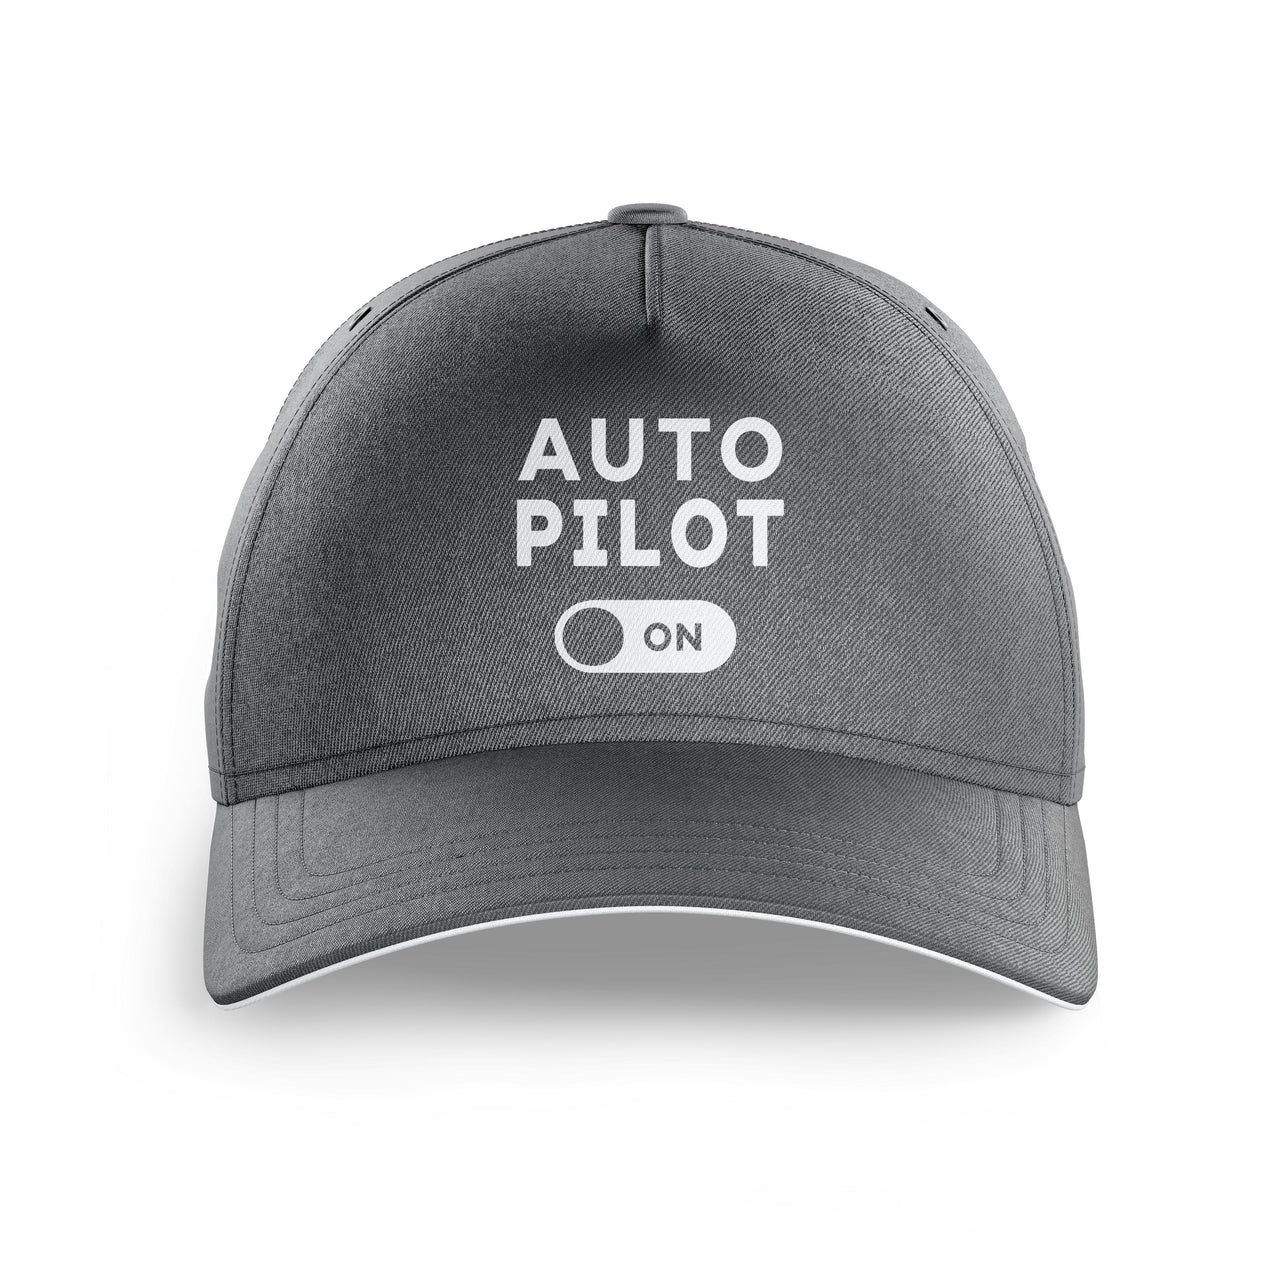 Auto Pilot ON Printed Hats